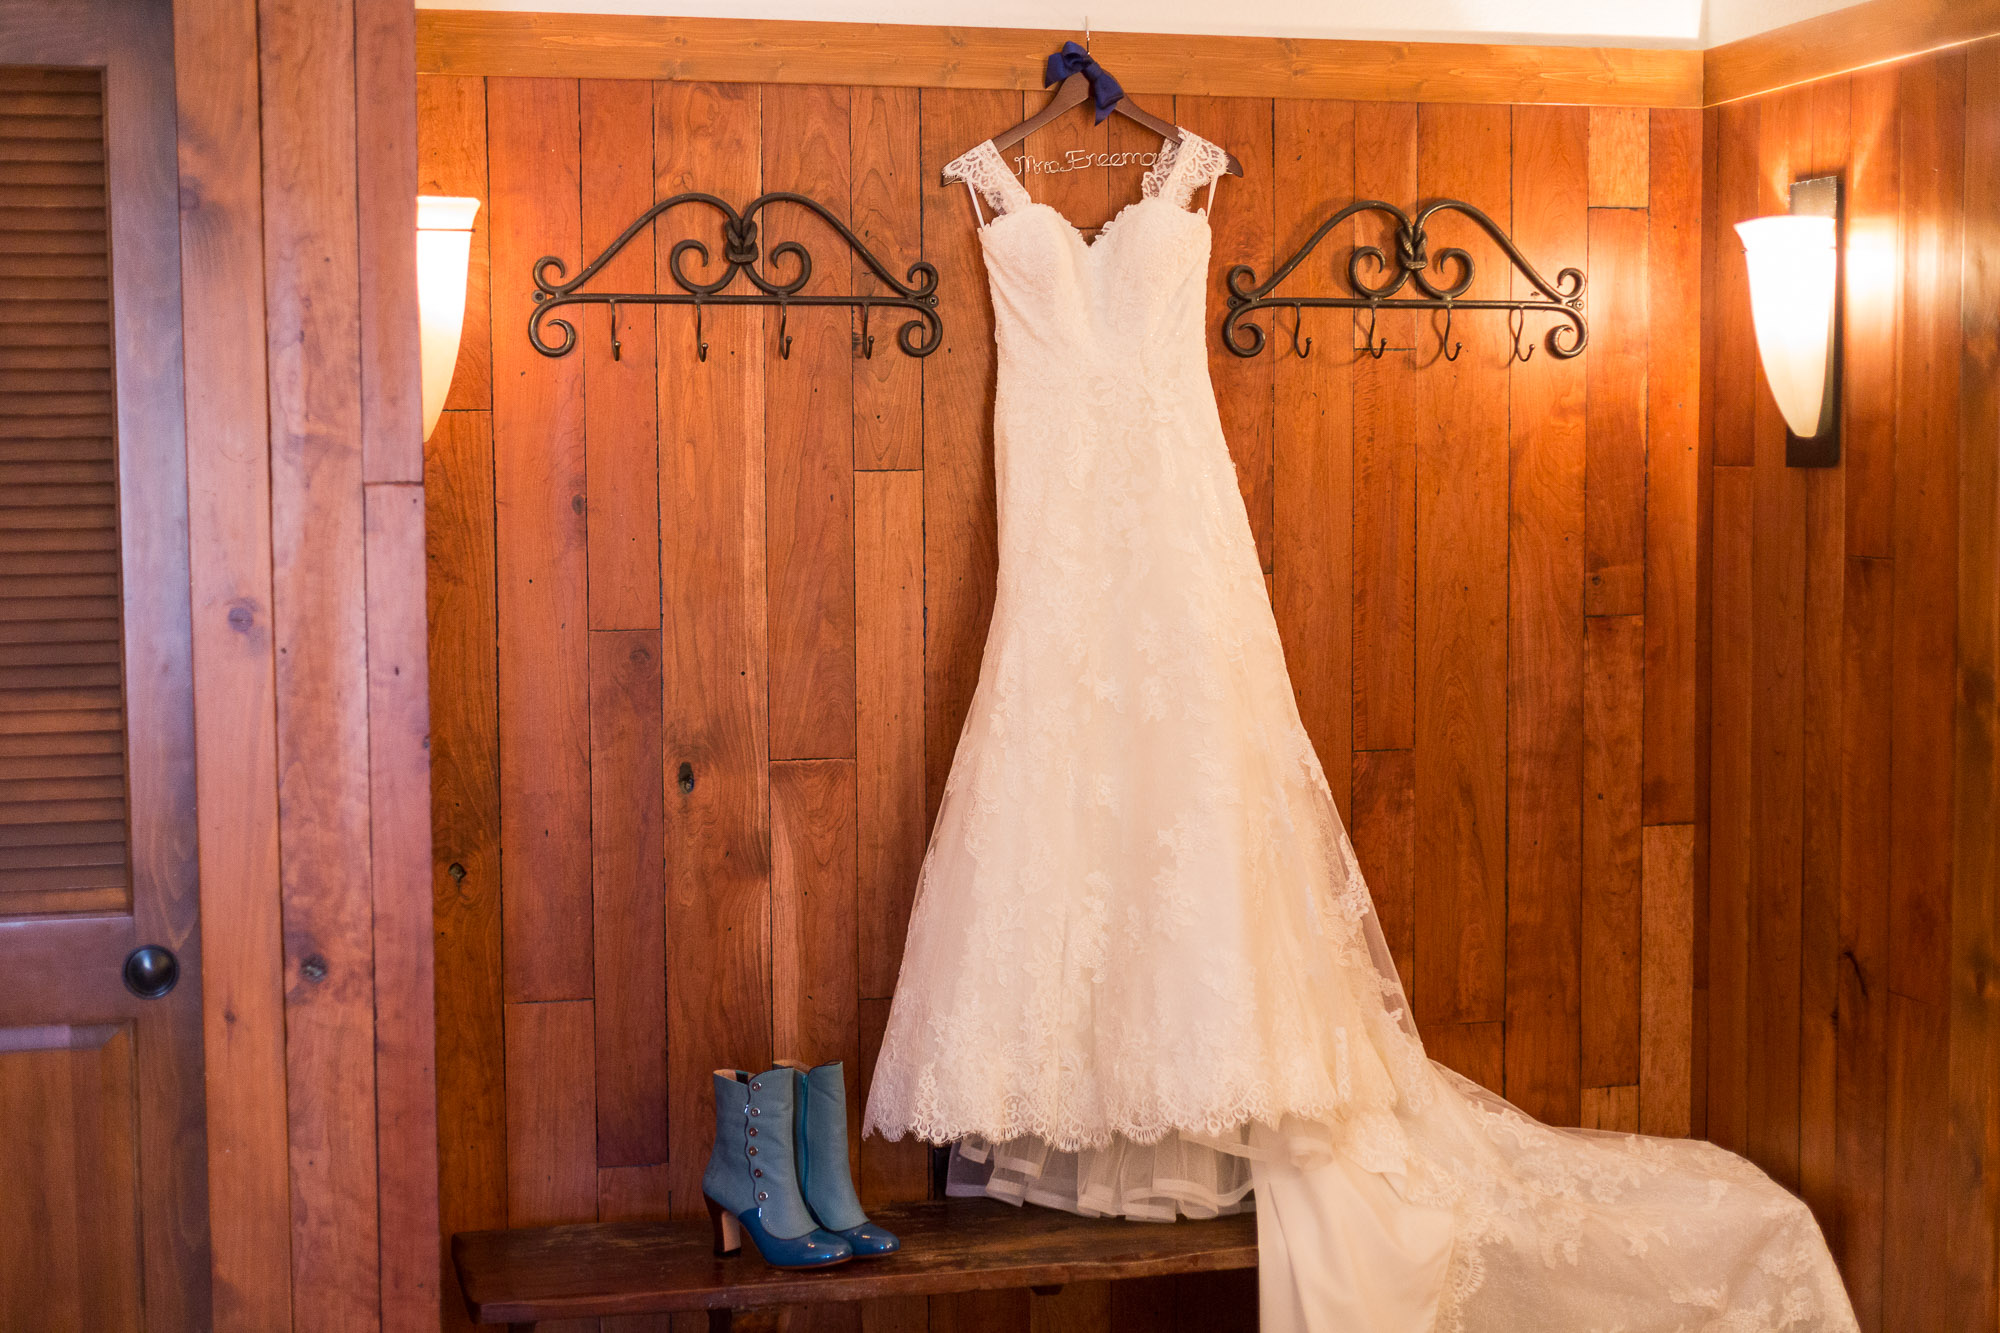 Main Street Station Breckenridge, Colorado Wedding -- Gorgeous Wedding Photos - The Overwhelmed Bride